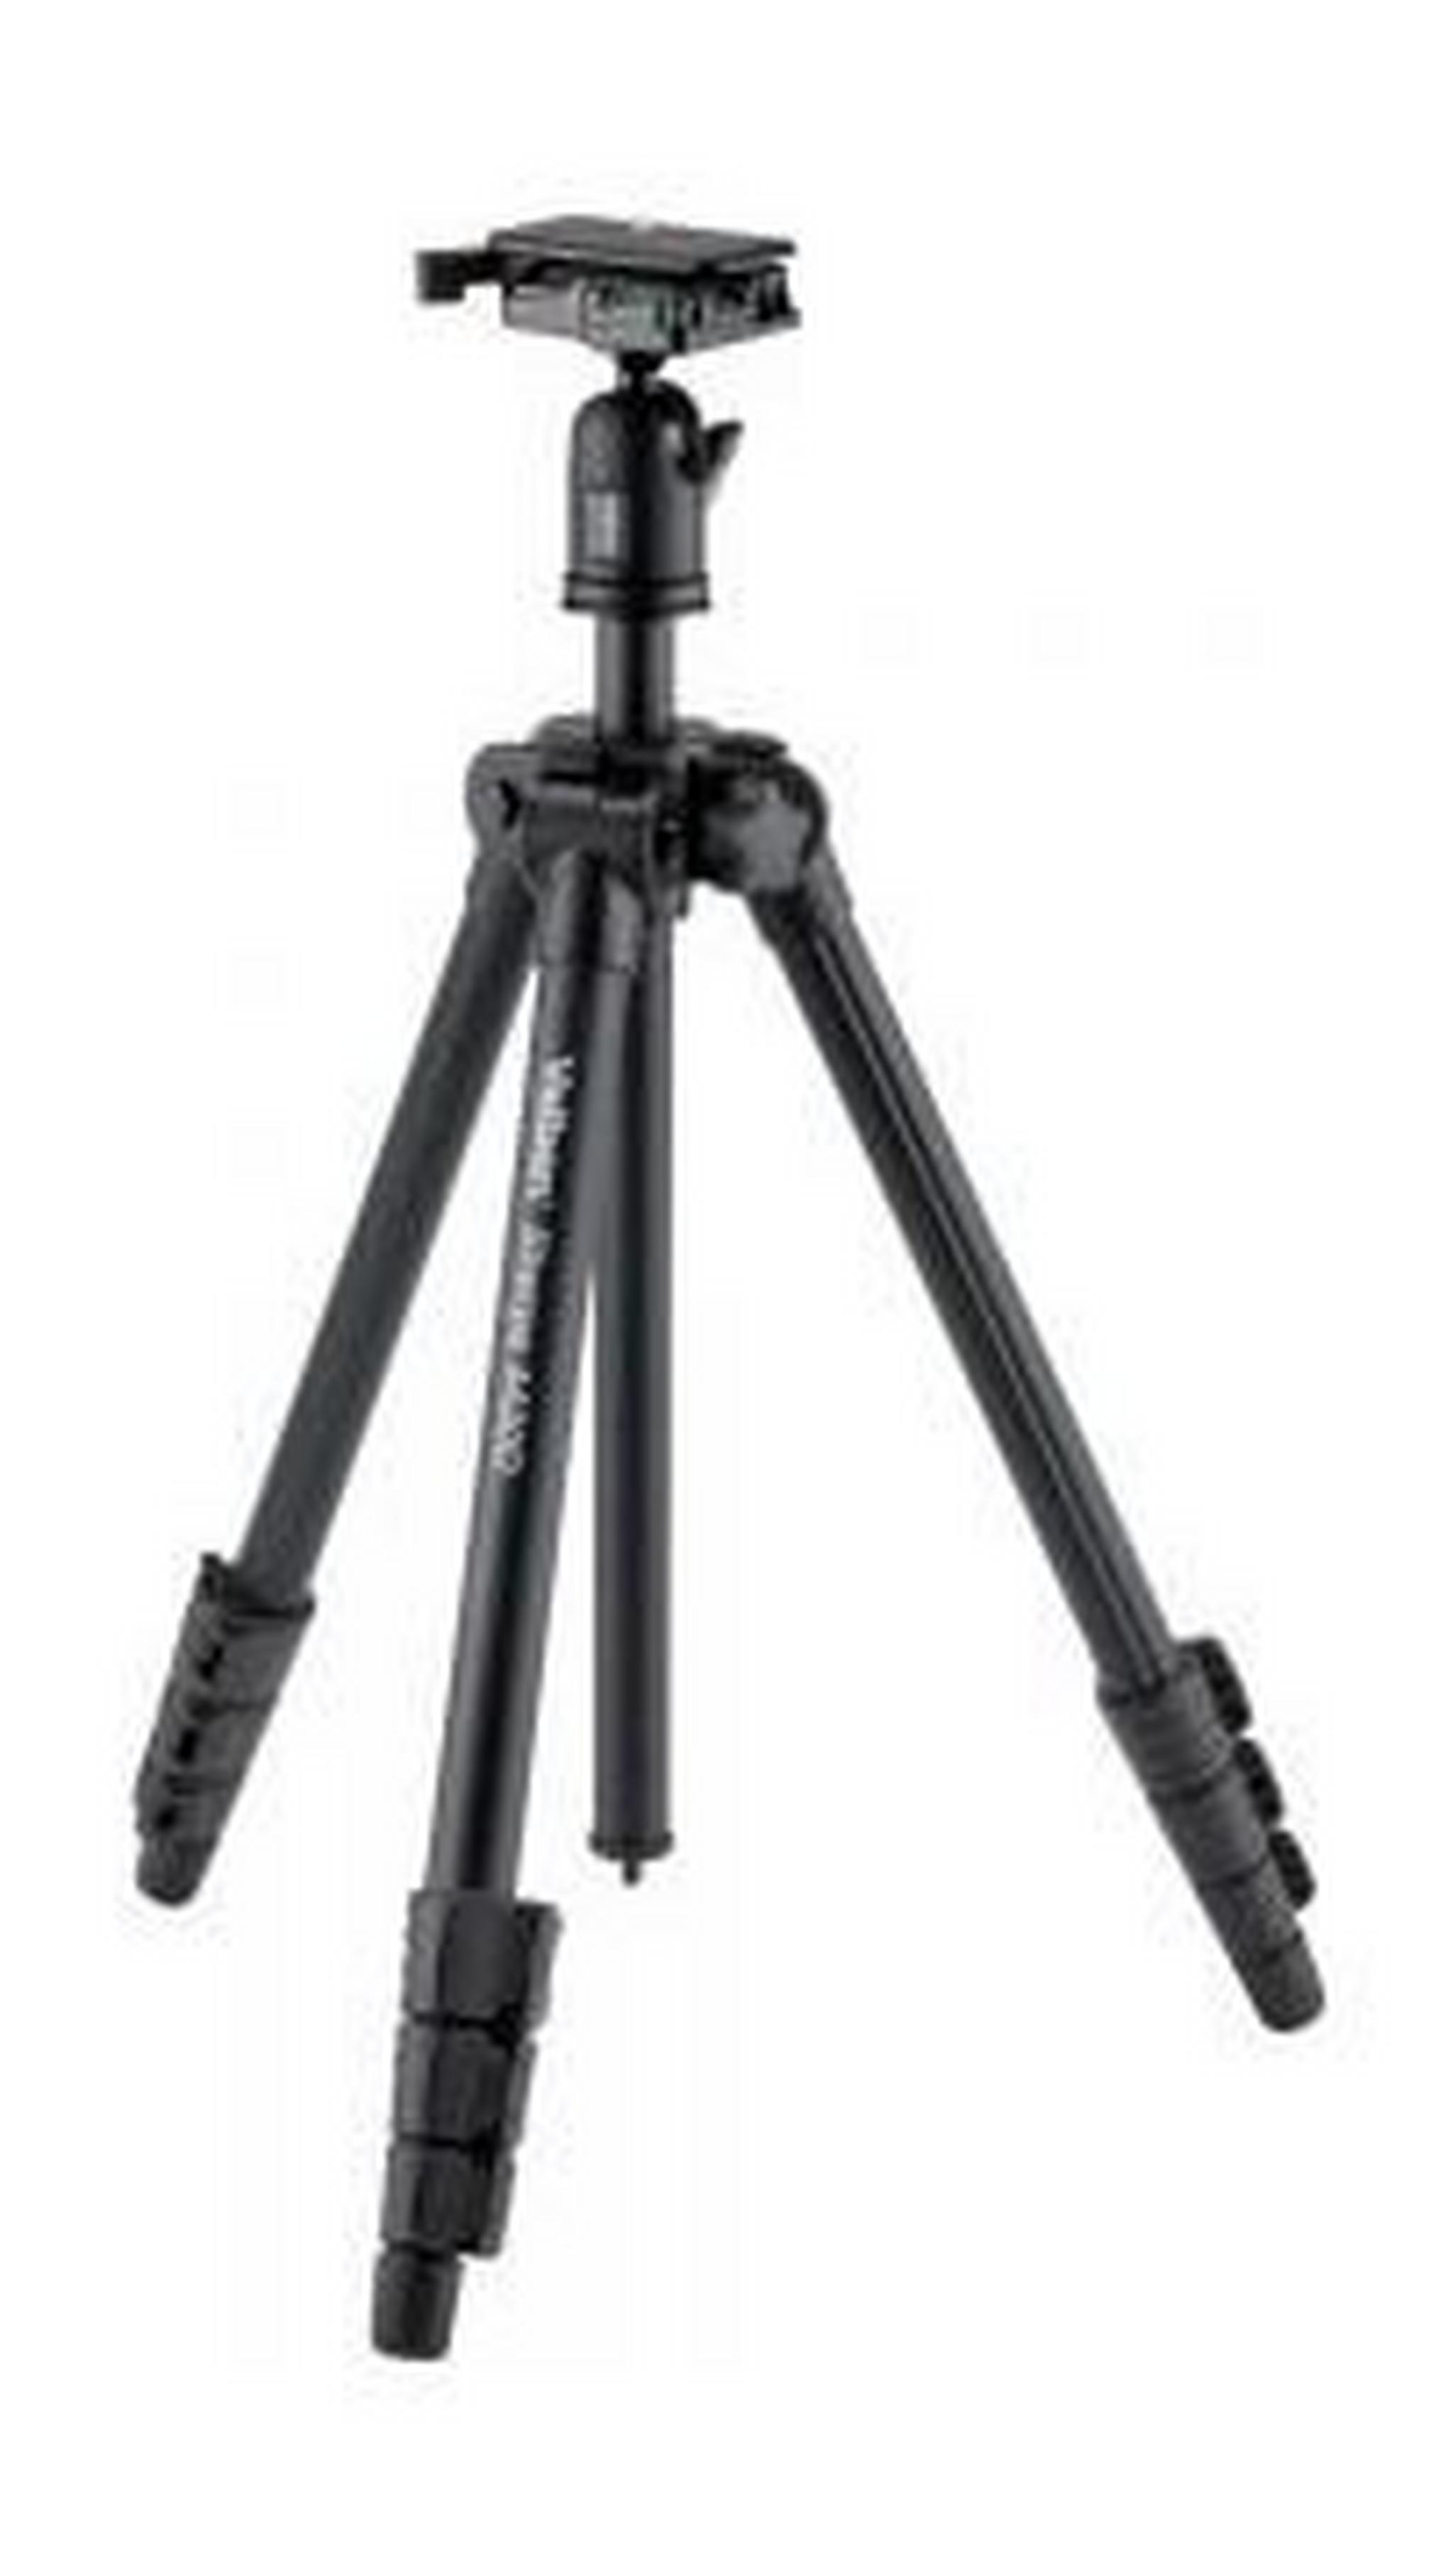 Fujifilm X-A5 Mirrorless Digital Camera + 15-45mm Lens + Velbon Tripod + Fuji LensPen Lens Cleaner